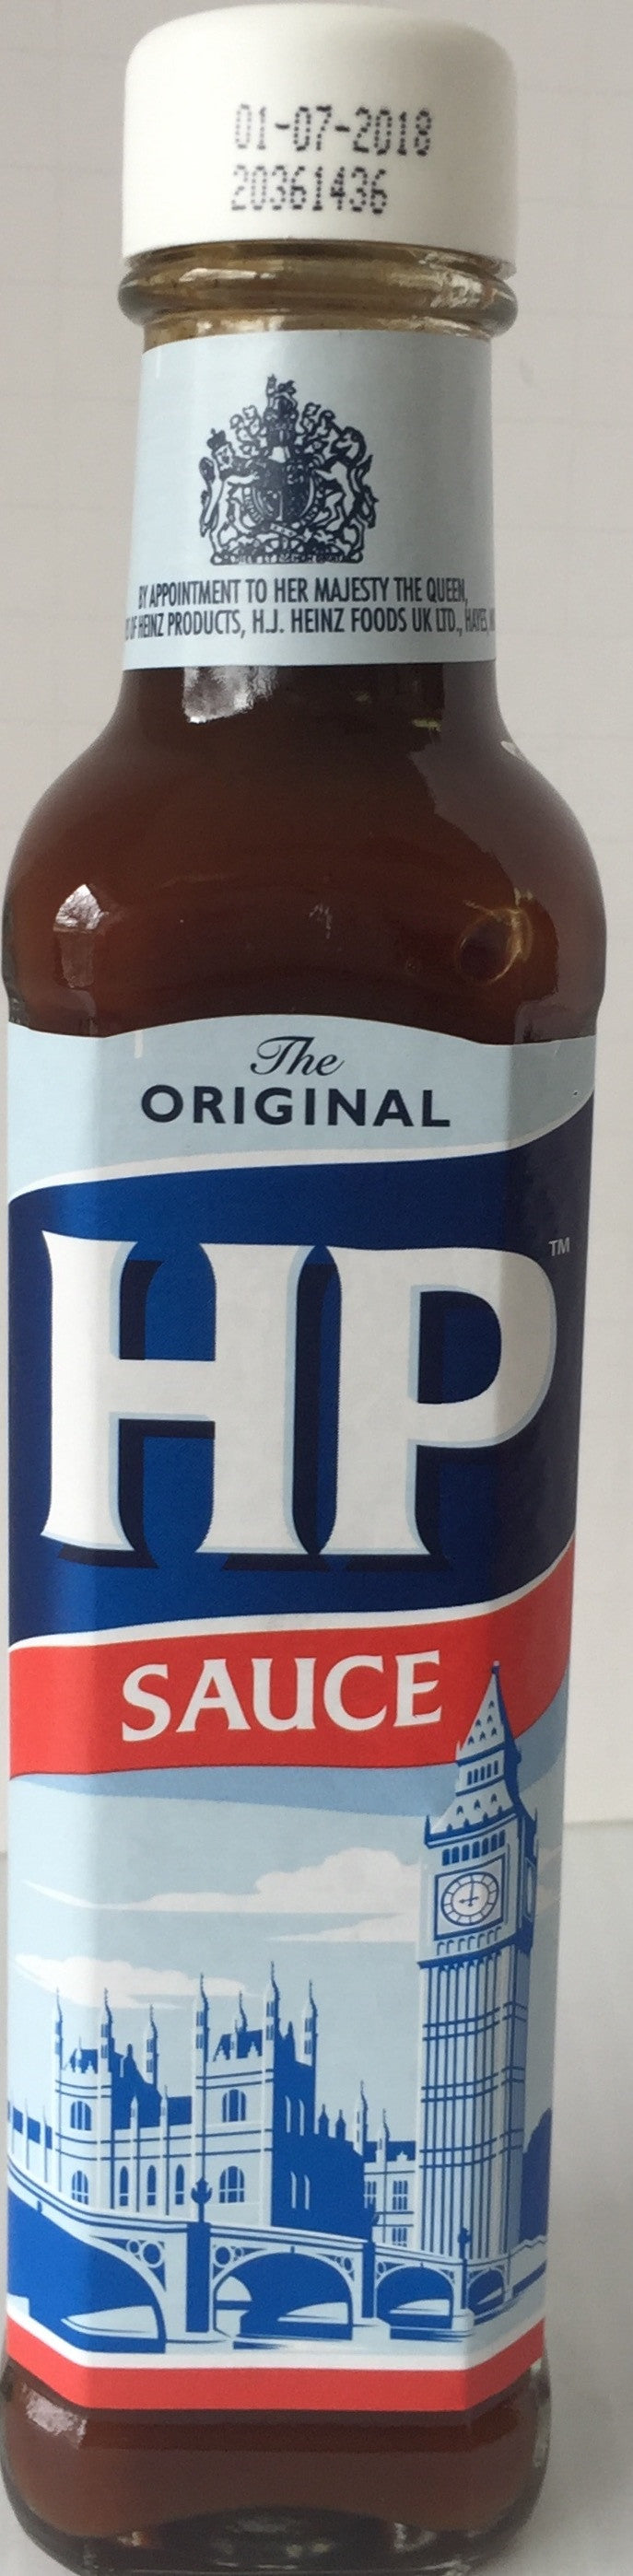 HP Sauce 255g bottle